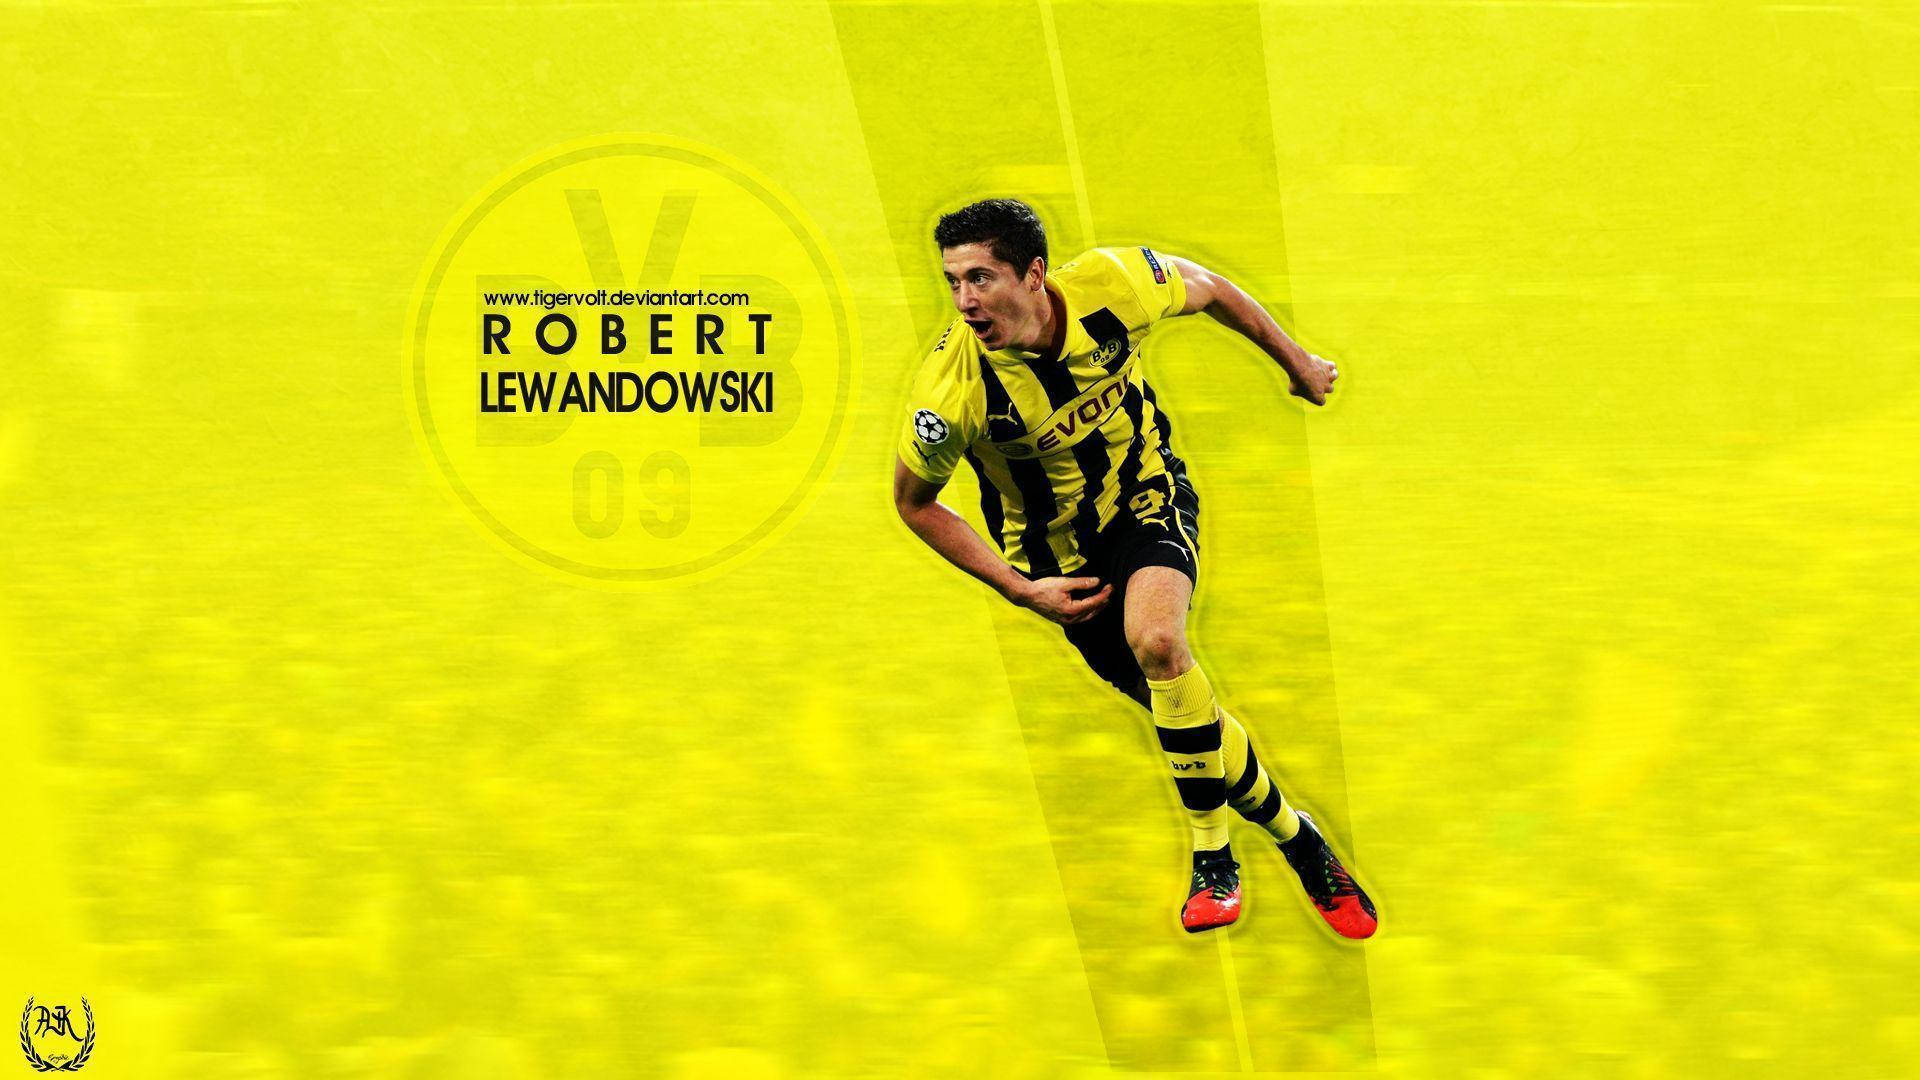 Caption: Robert Lewandowski In Action During A Football Match. Background